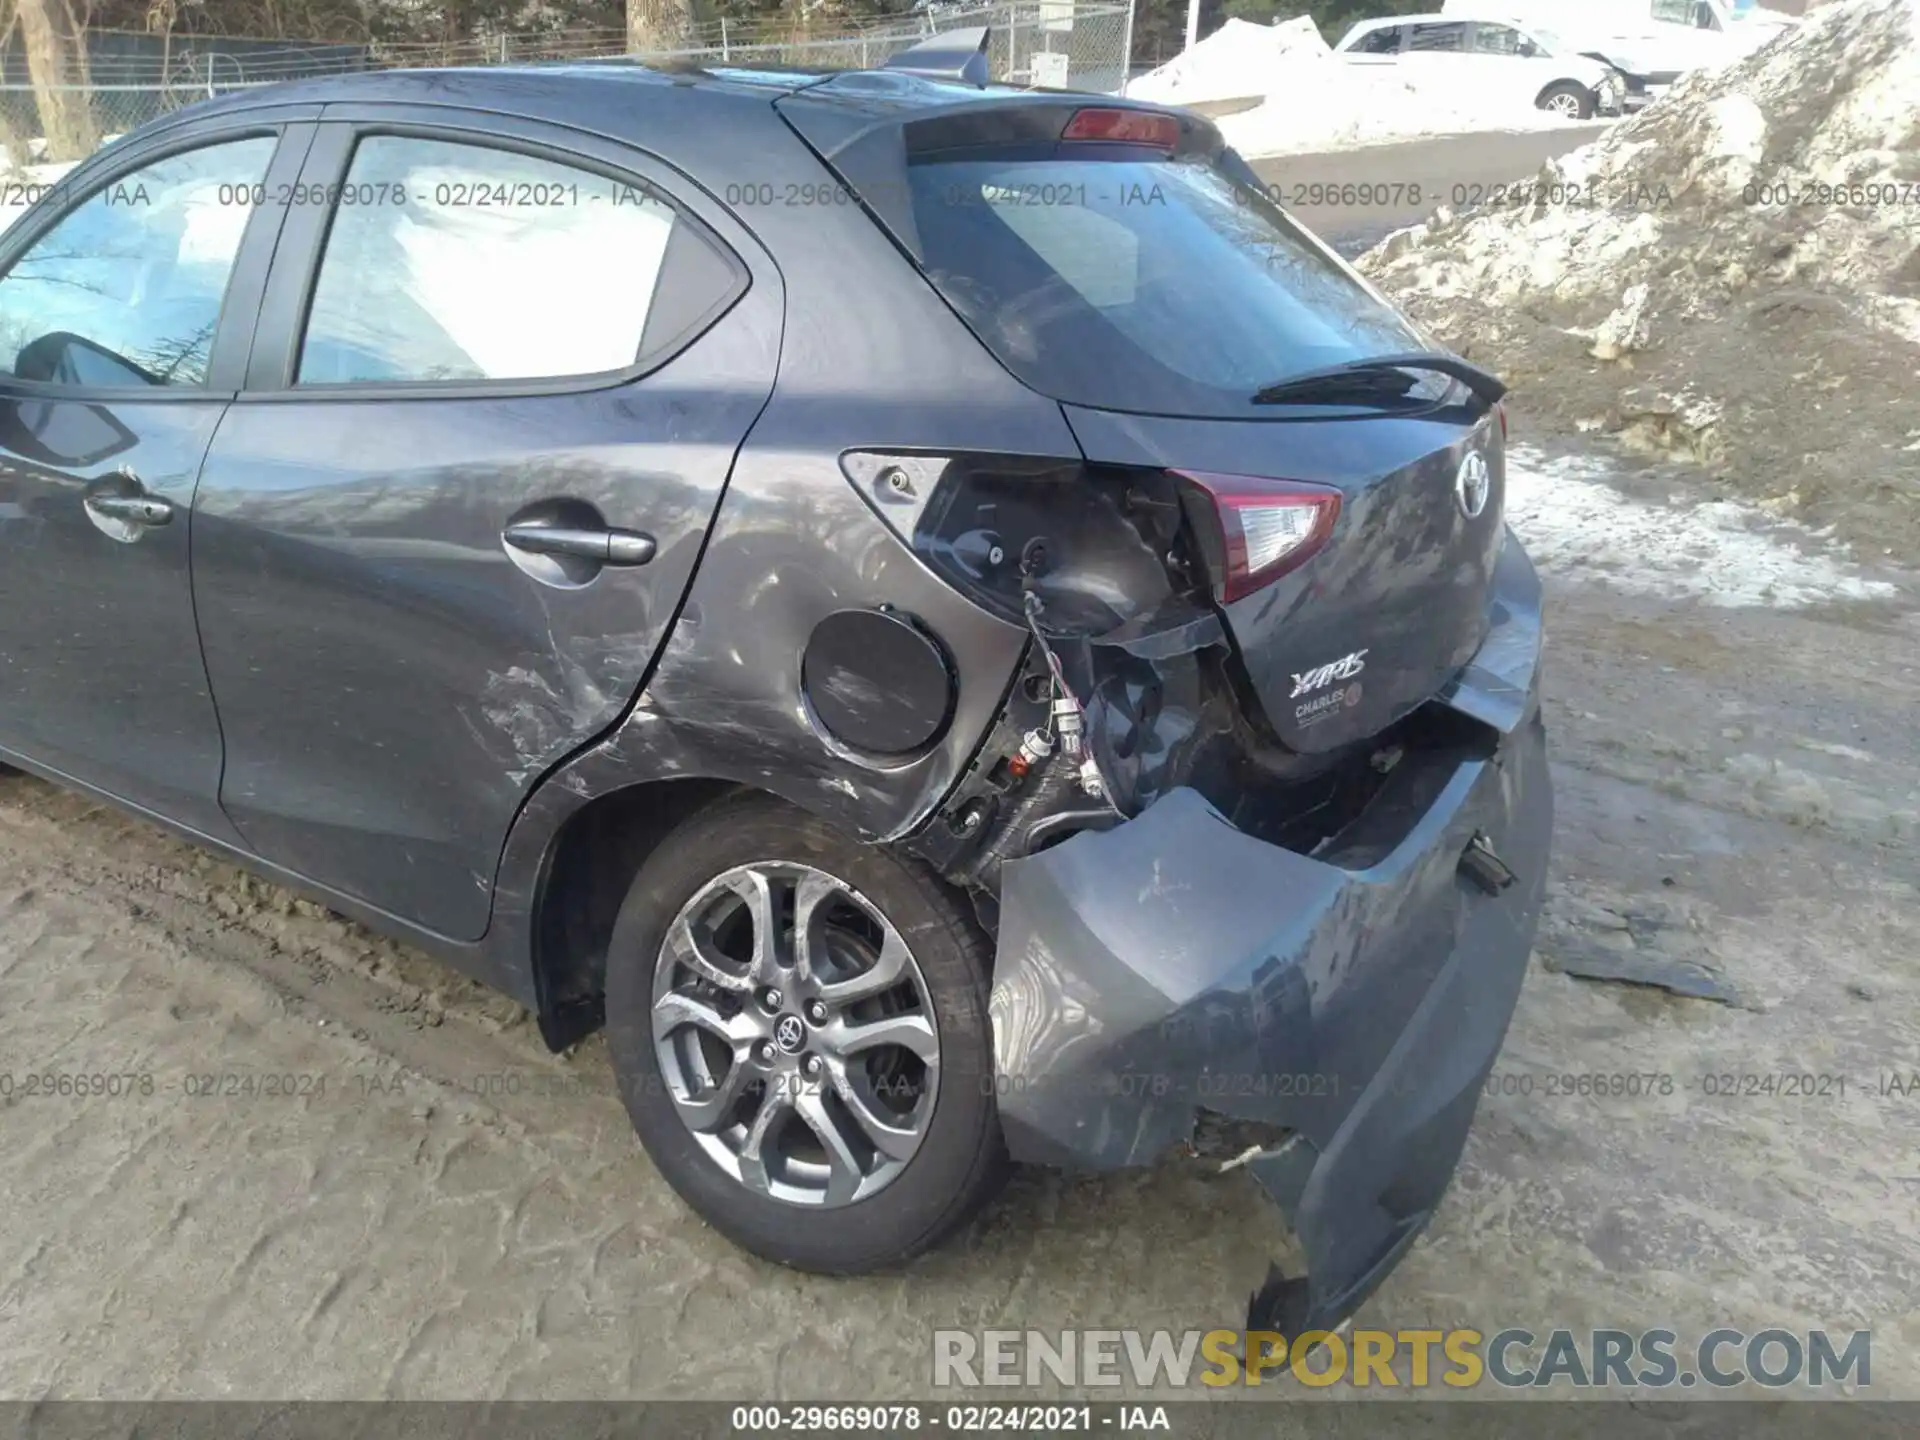 6 Photograph of a damaged car 3MYDLBJV9LY706412 TOYOTA YARIS HATCHBACK 2020